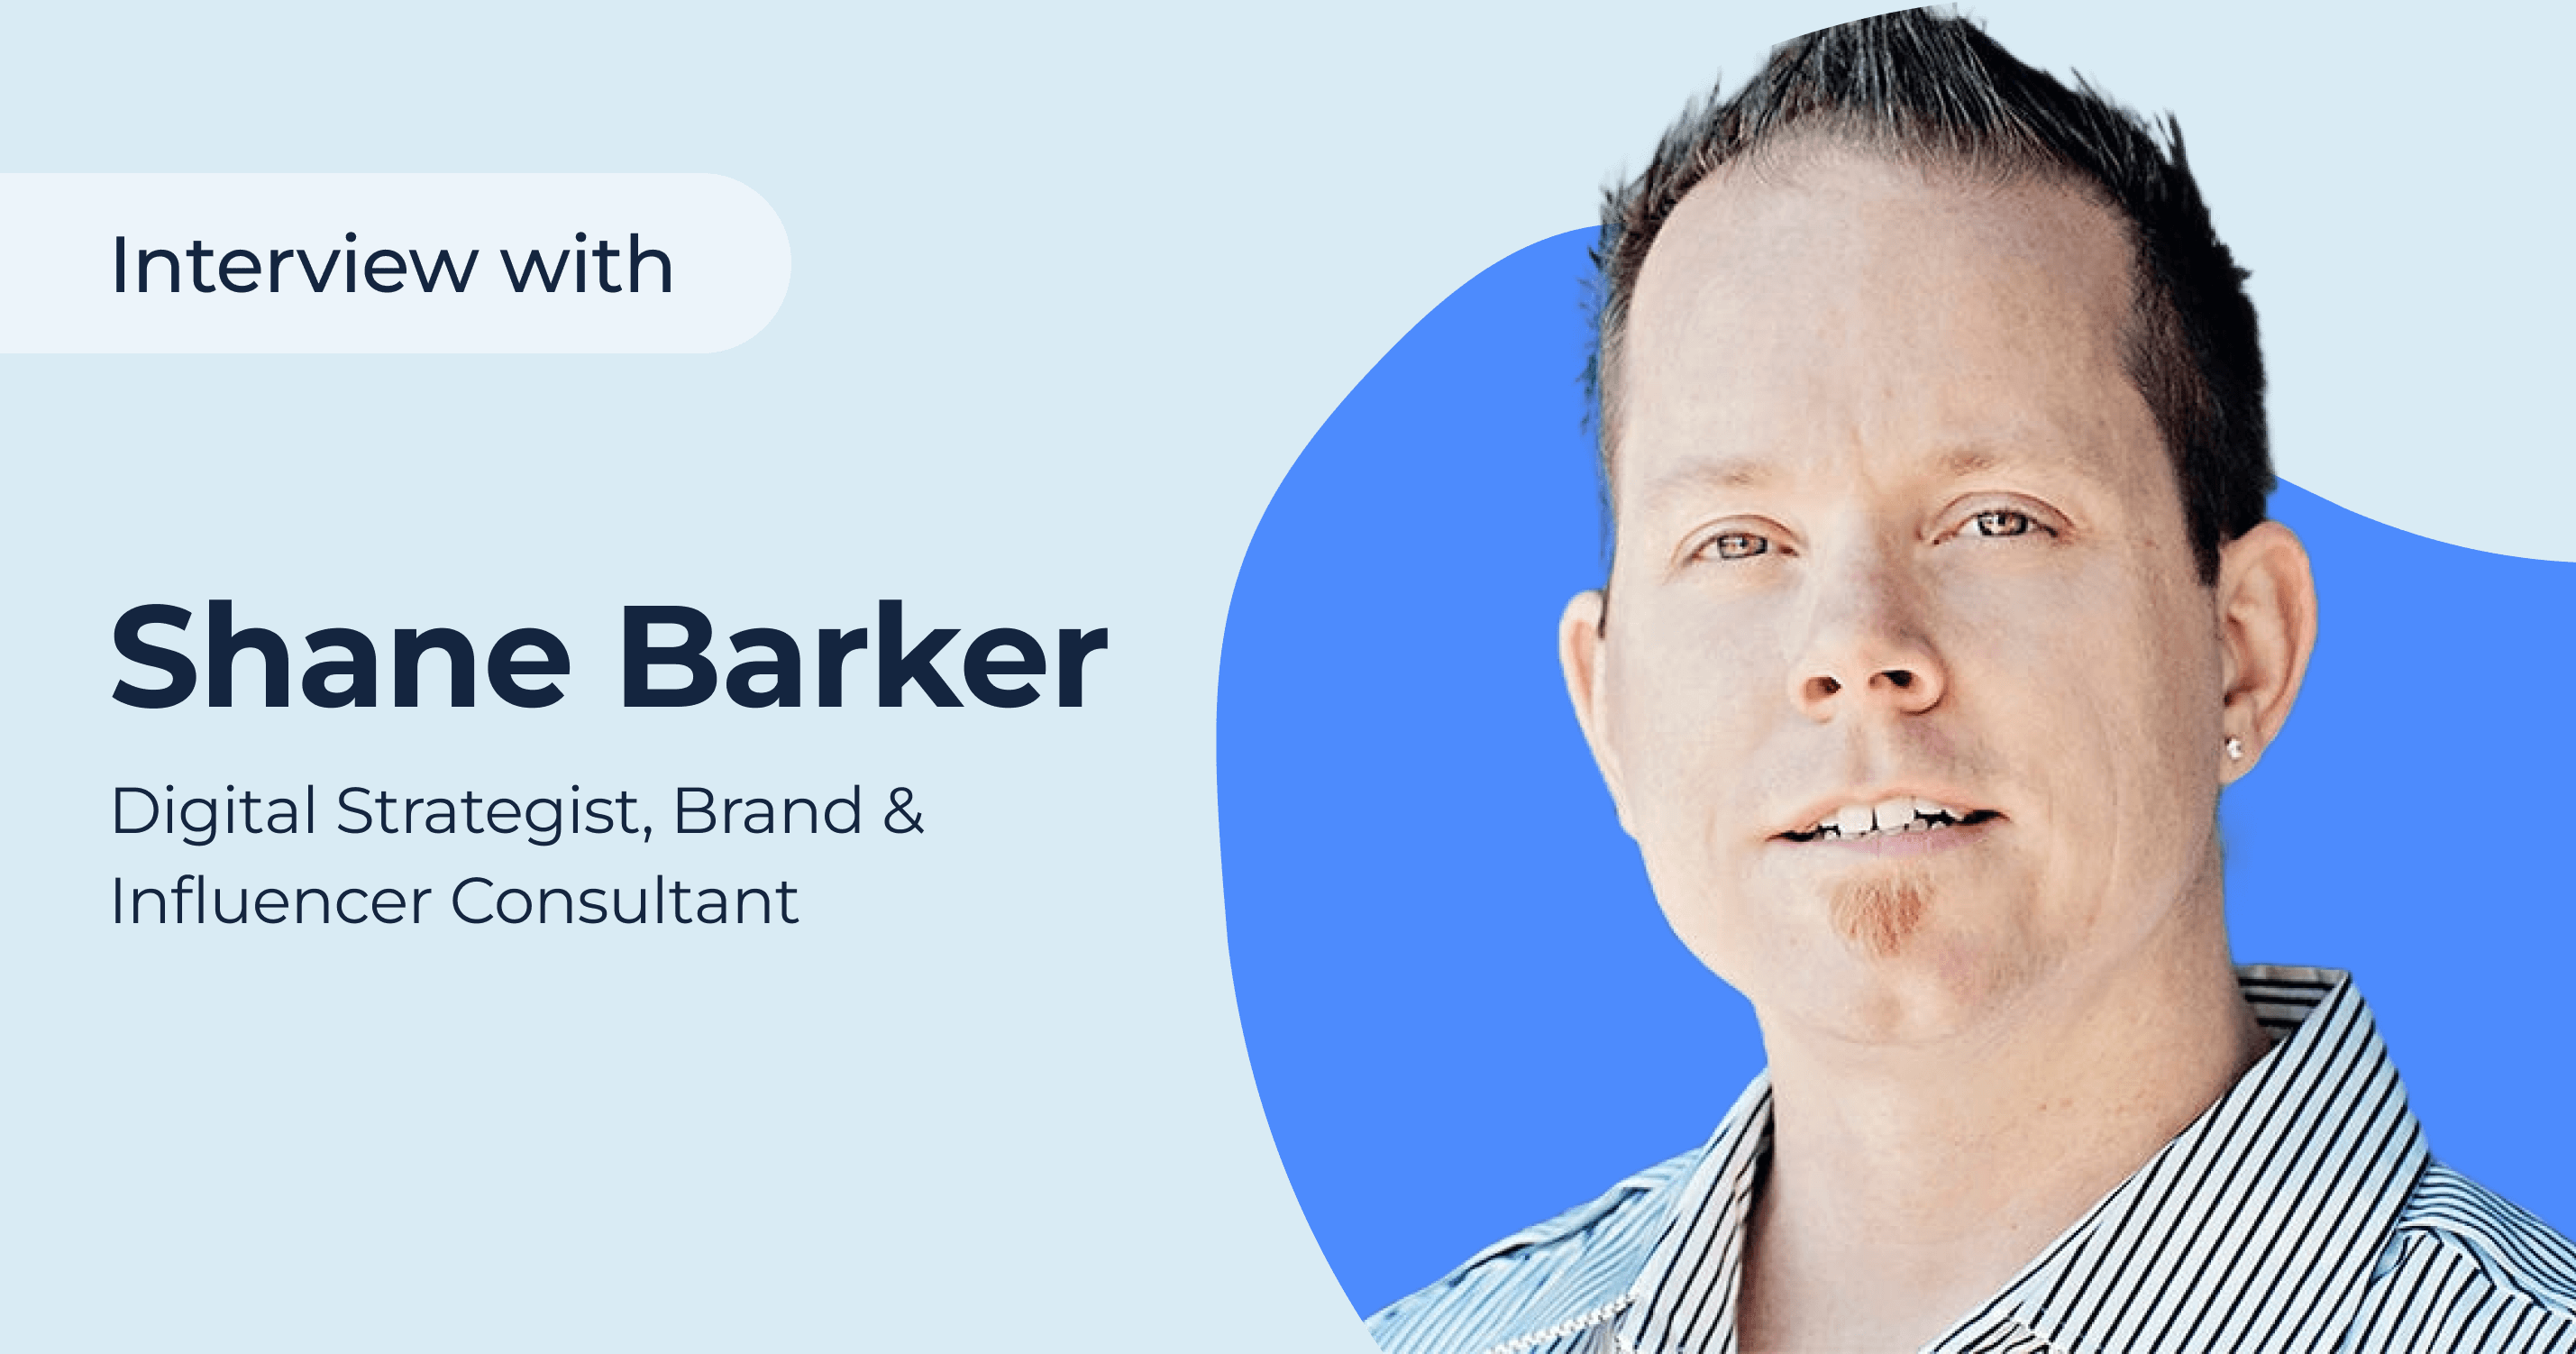 Interview with Digital Strategist, Brand & Influencer Consultant Shane Barker